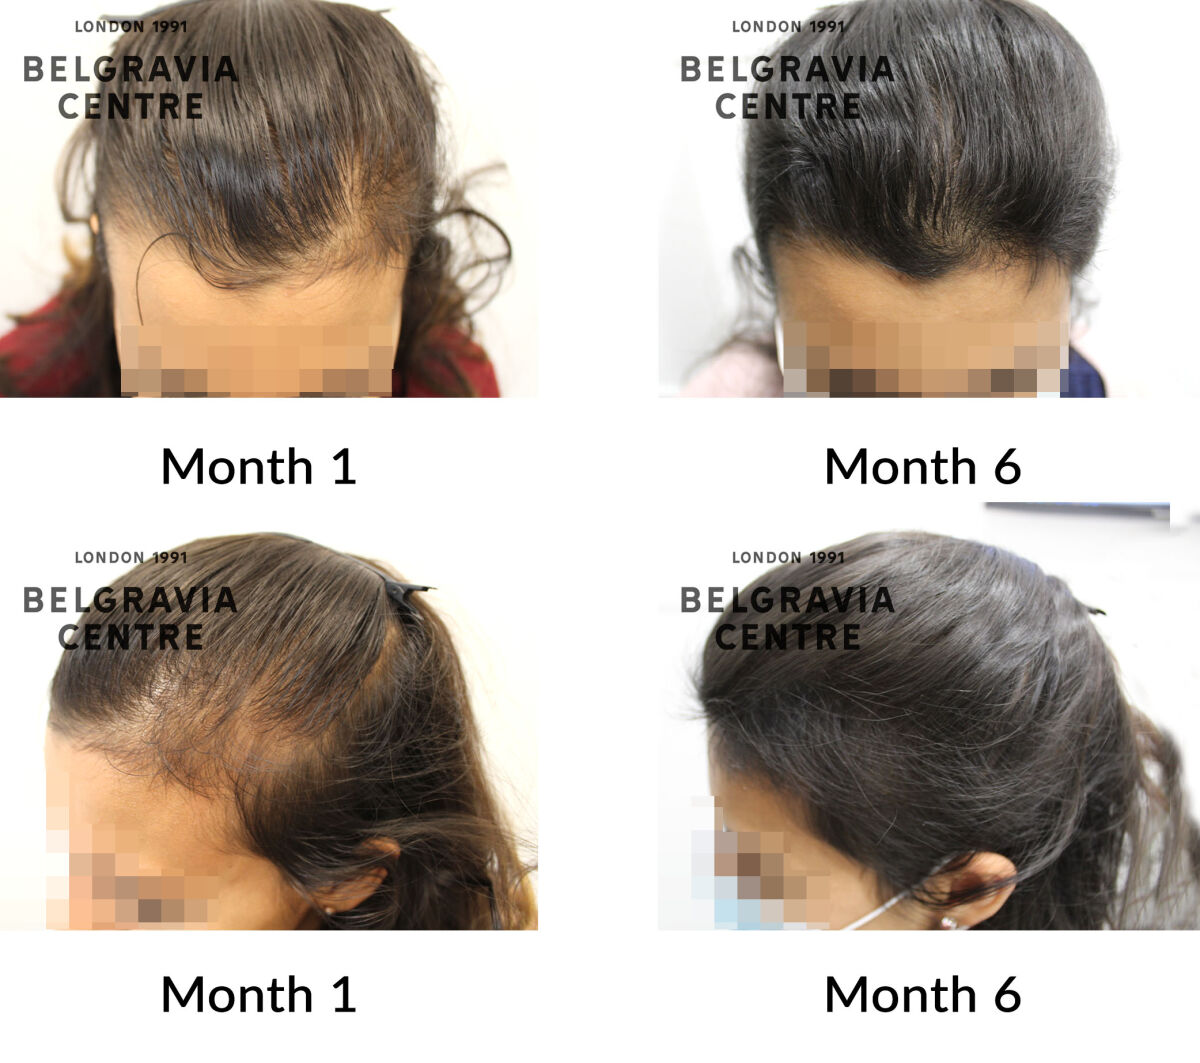 female pattern hair loss the belgravia centre 317919